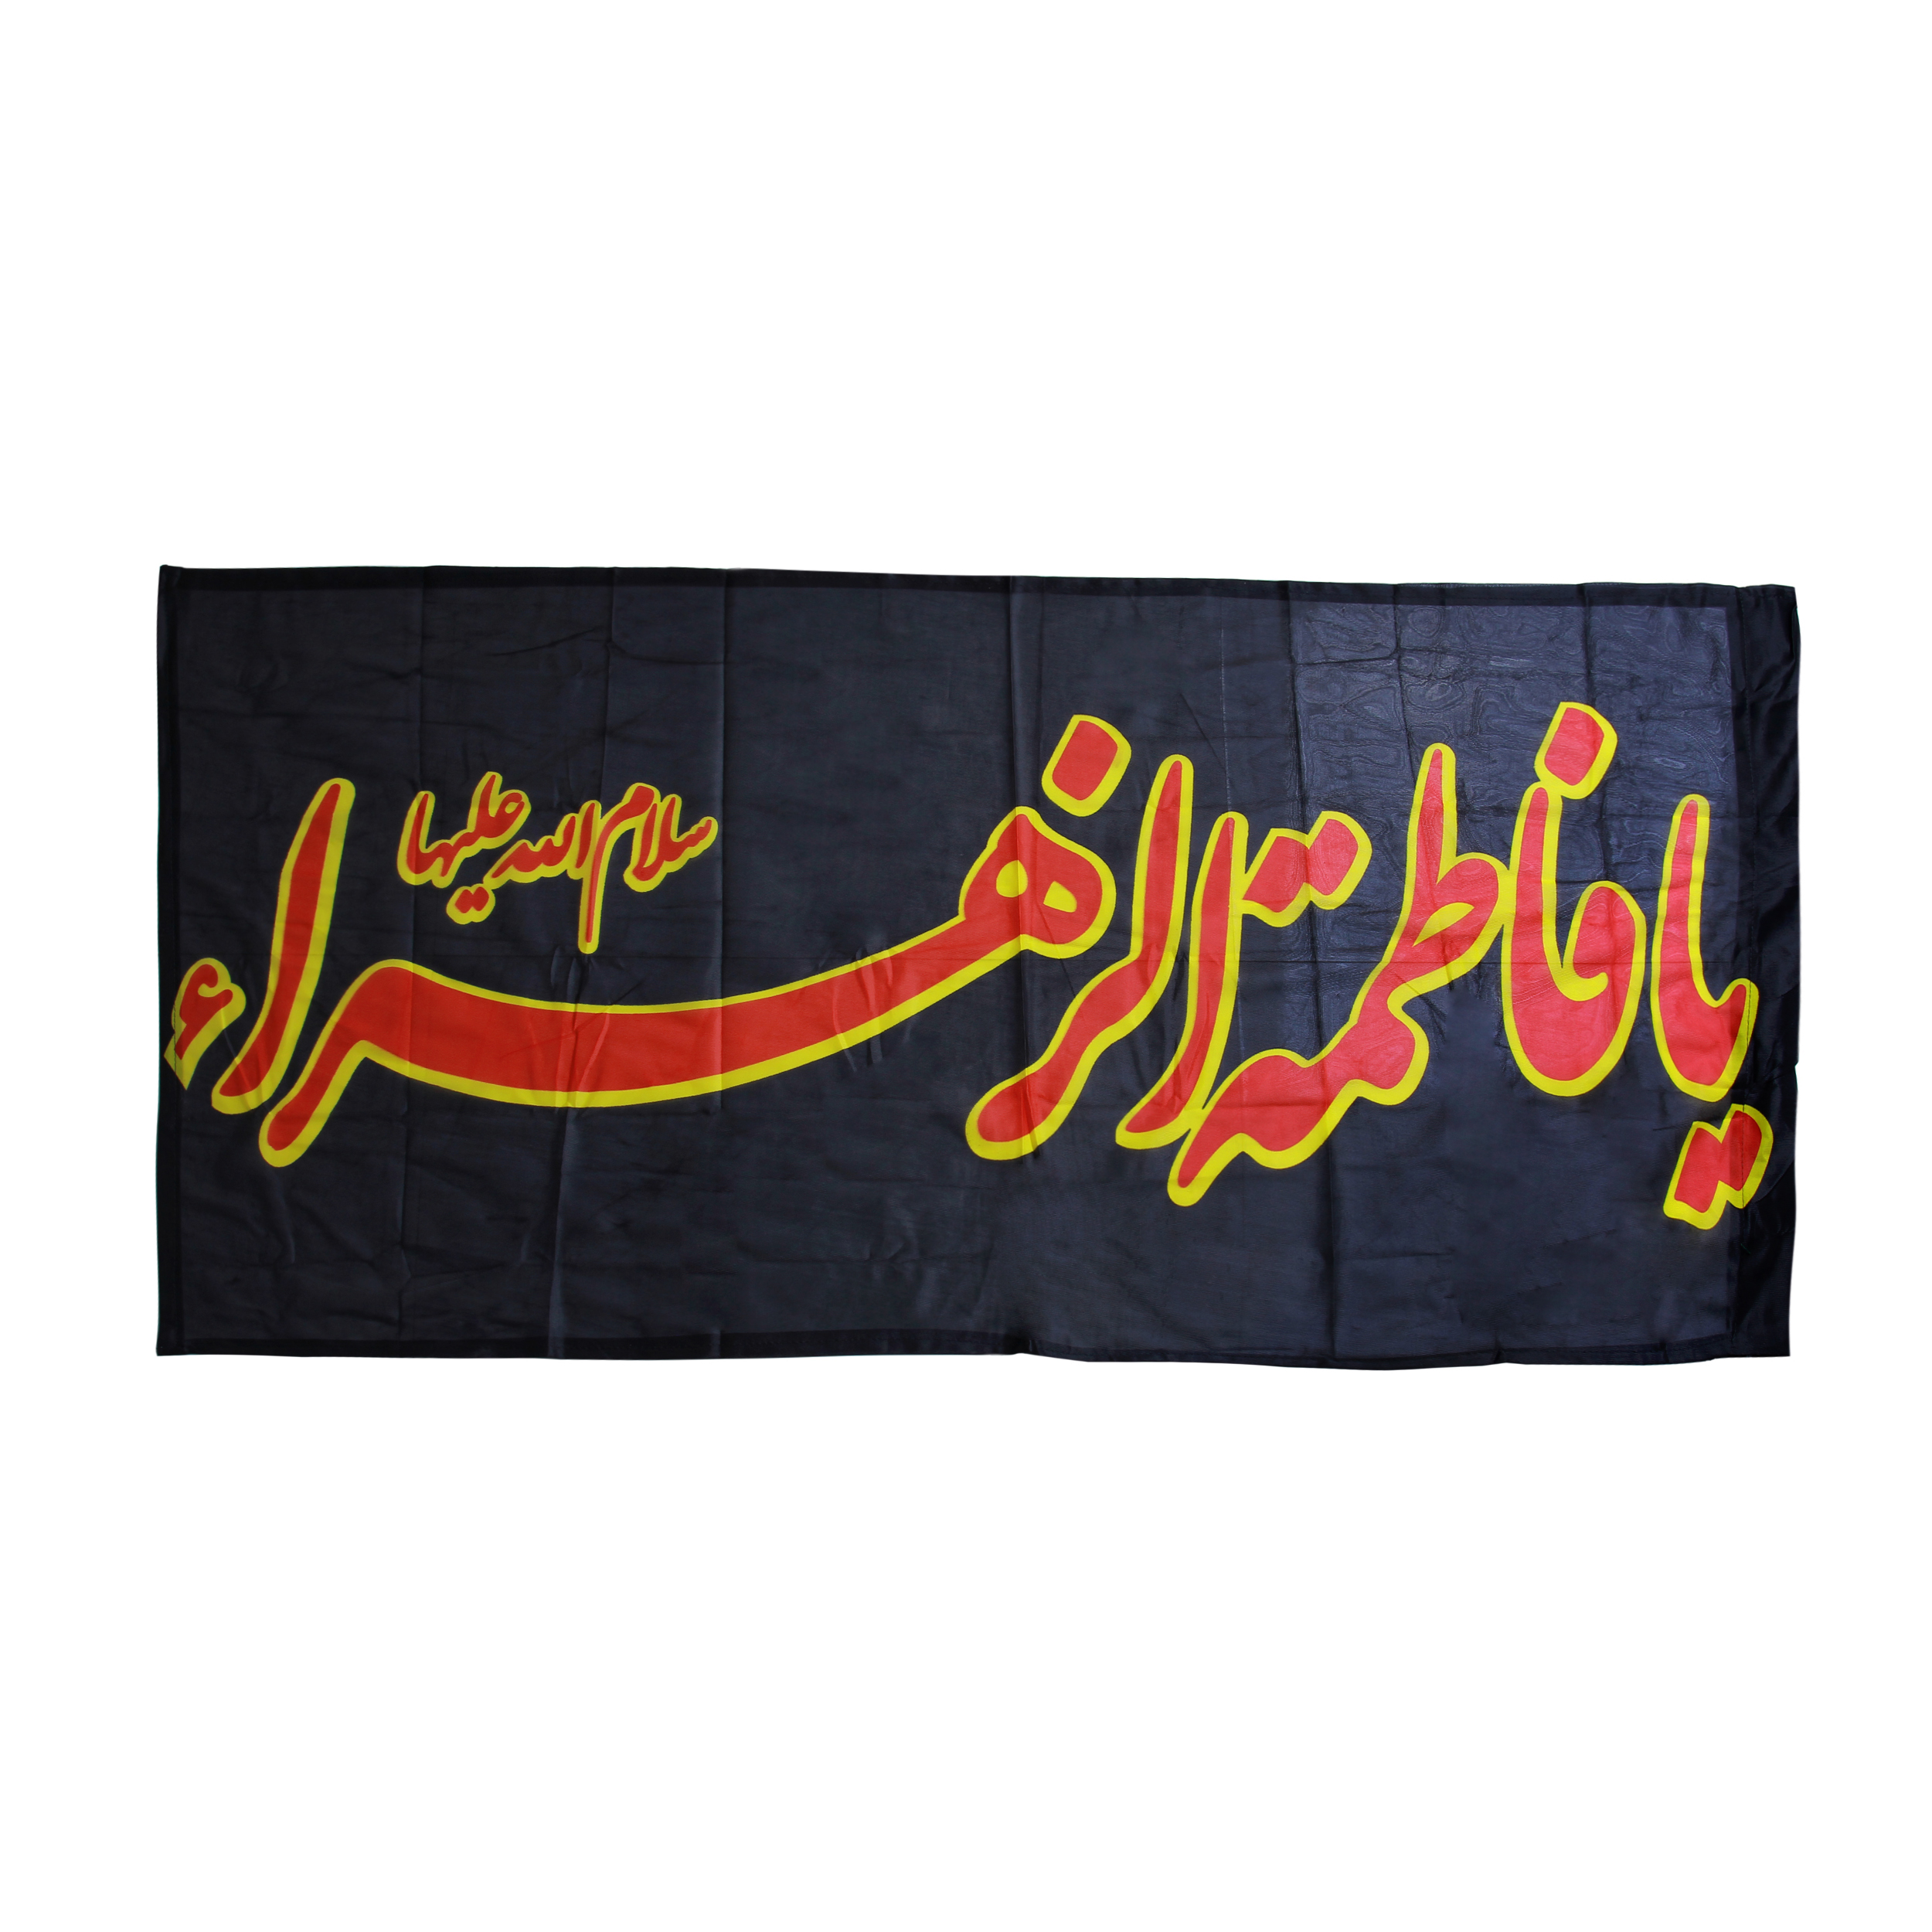   پرچم  بازرگانی میلادی طرح یا فاطمة الزهرا  کد PAR-116